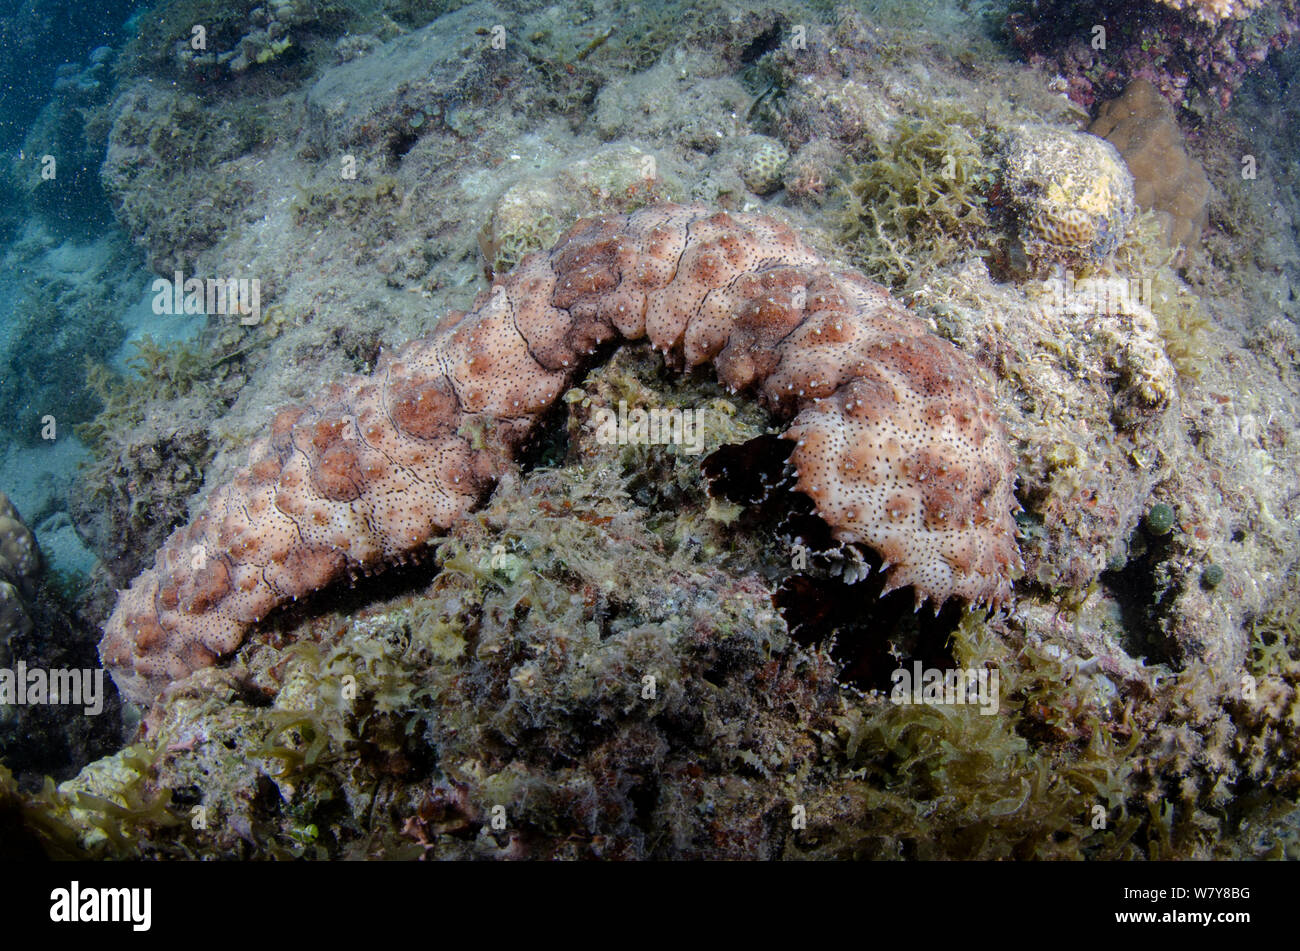 Blackspotted sea cucumber (Bohadschia graeffei) on coral reef, Fiji, South Pacific. Stock Photo